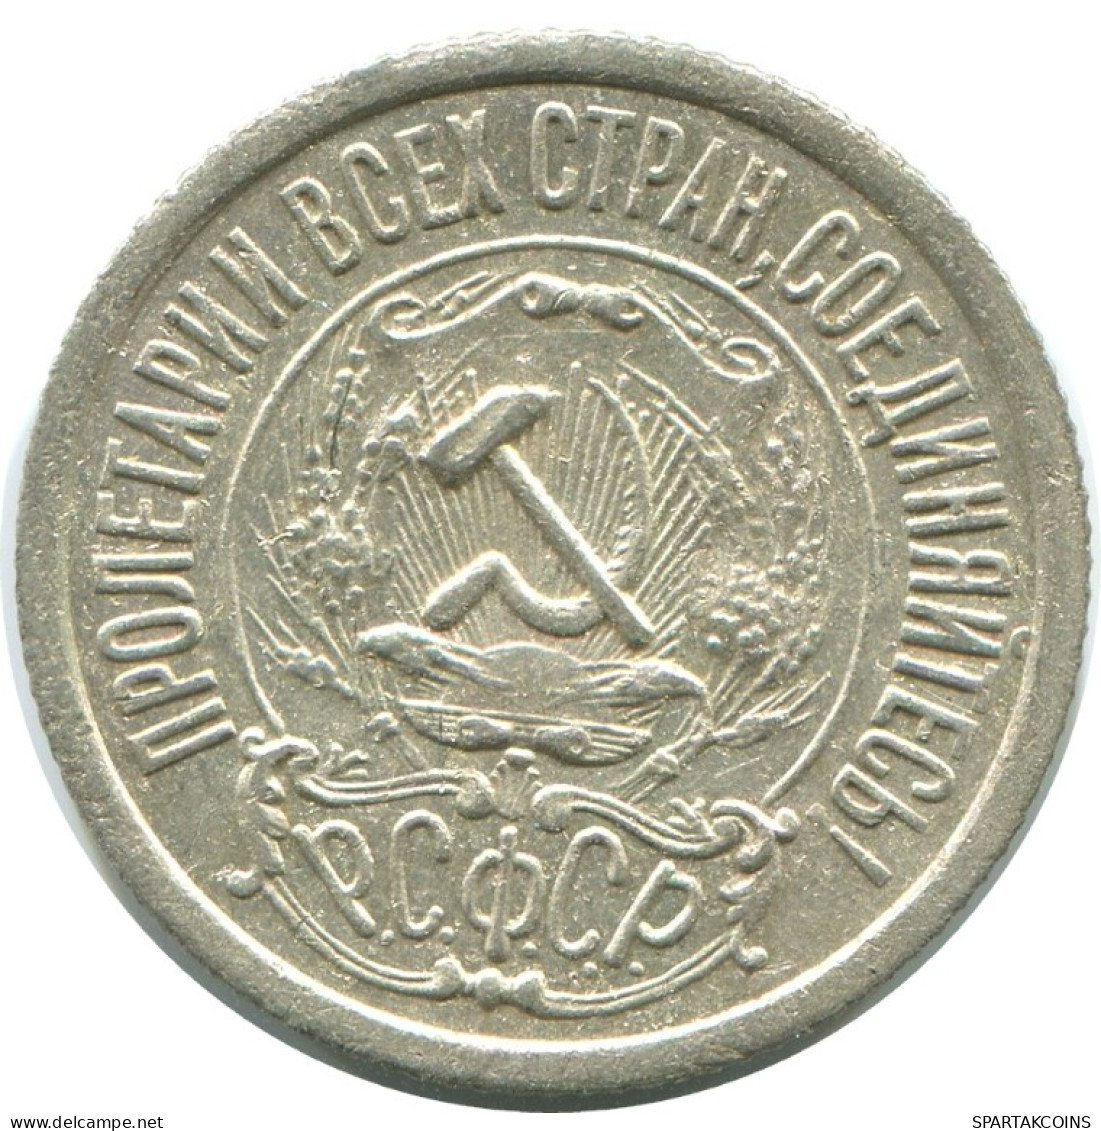 15 KOPEKS 1922 RUSSLAND RUSSIA RSFSR SILBER Münze HIGH GRADE #AF191.4.D.A - Russland